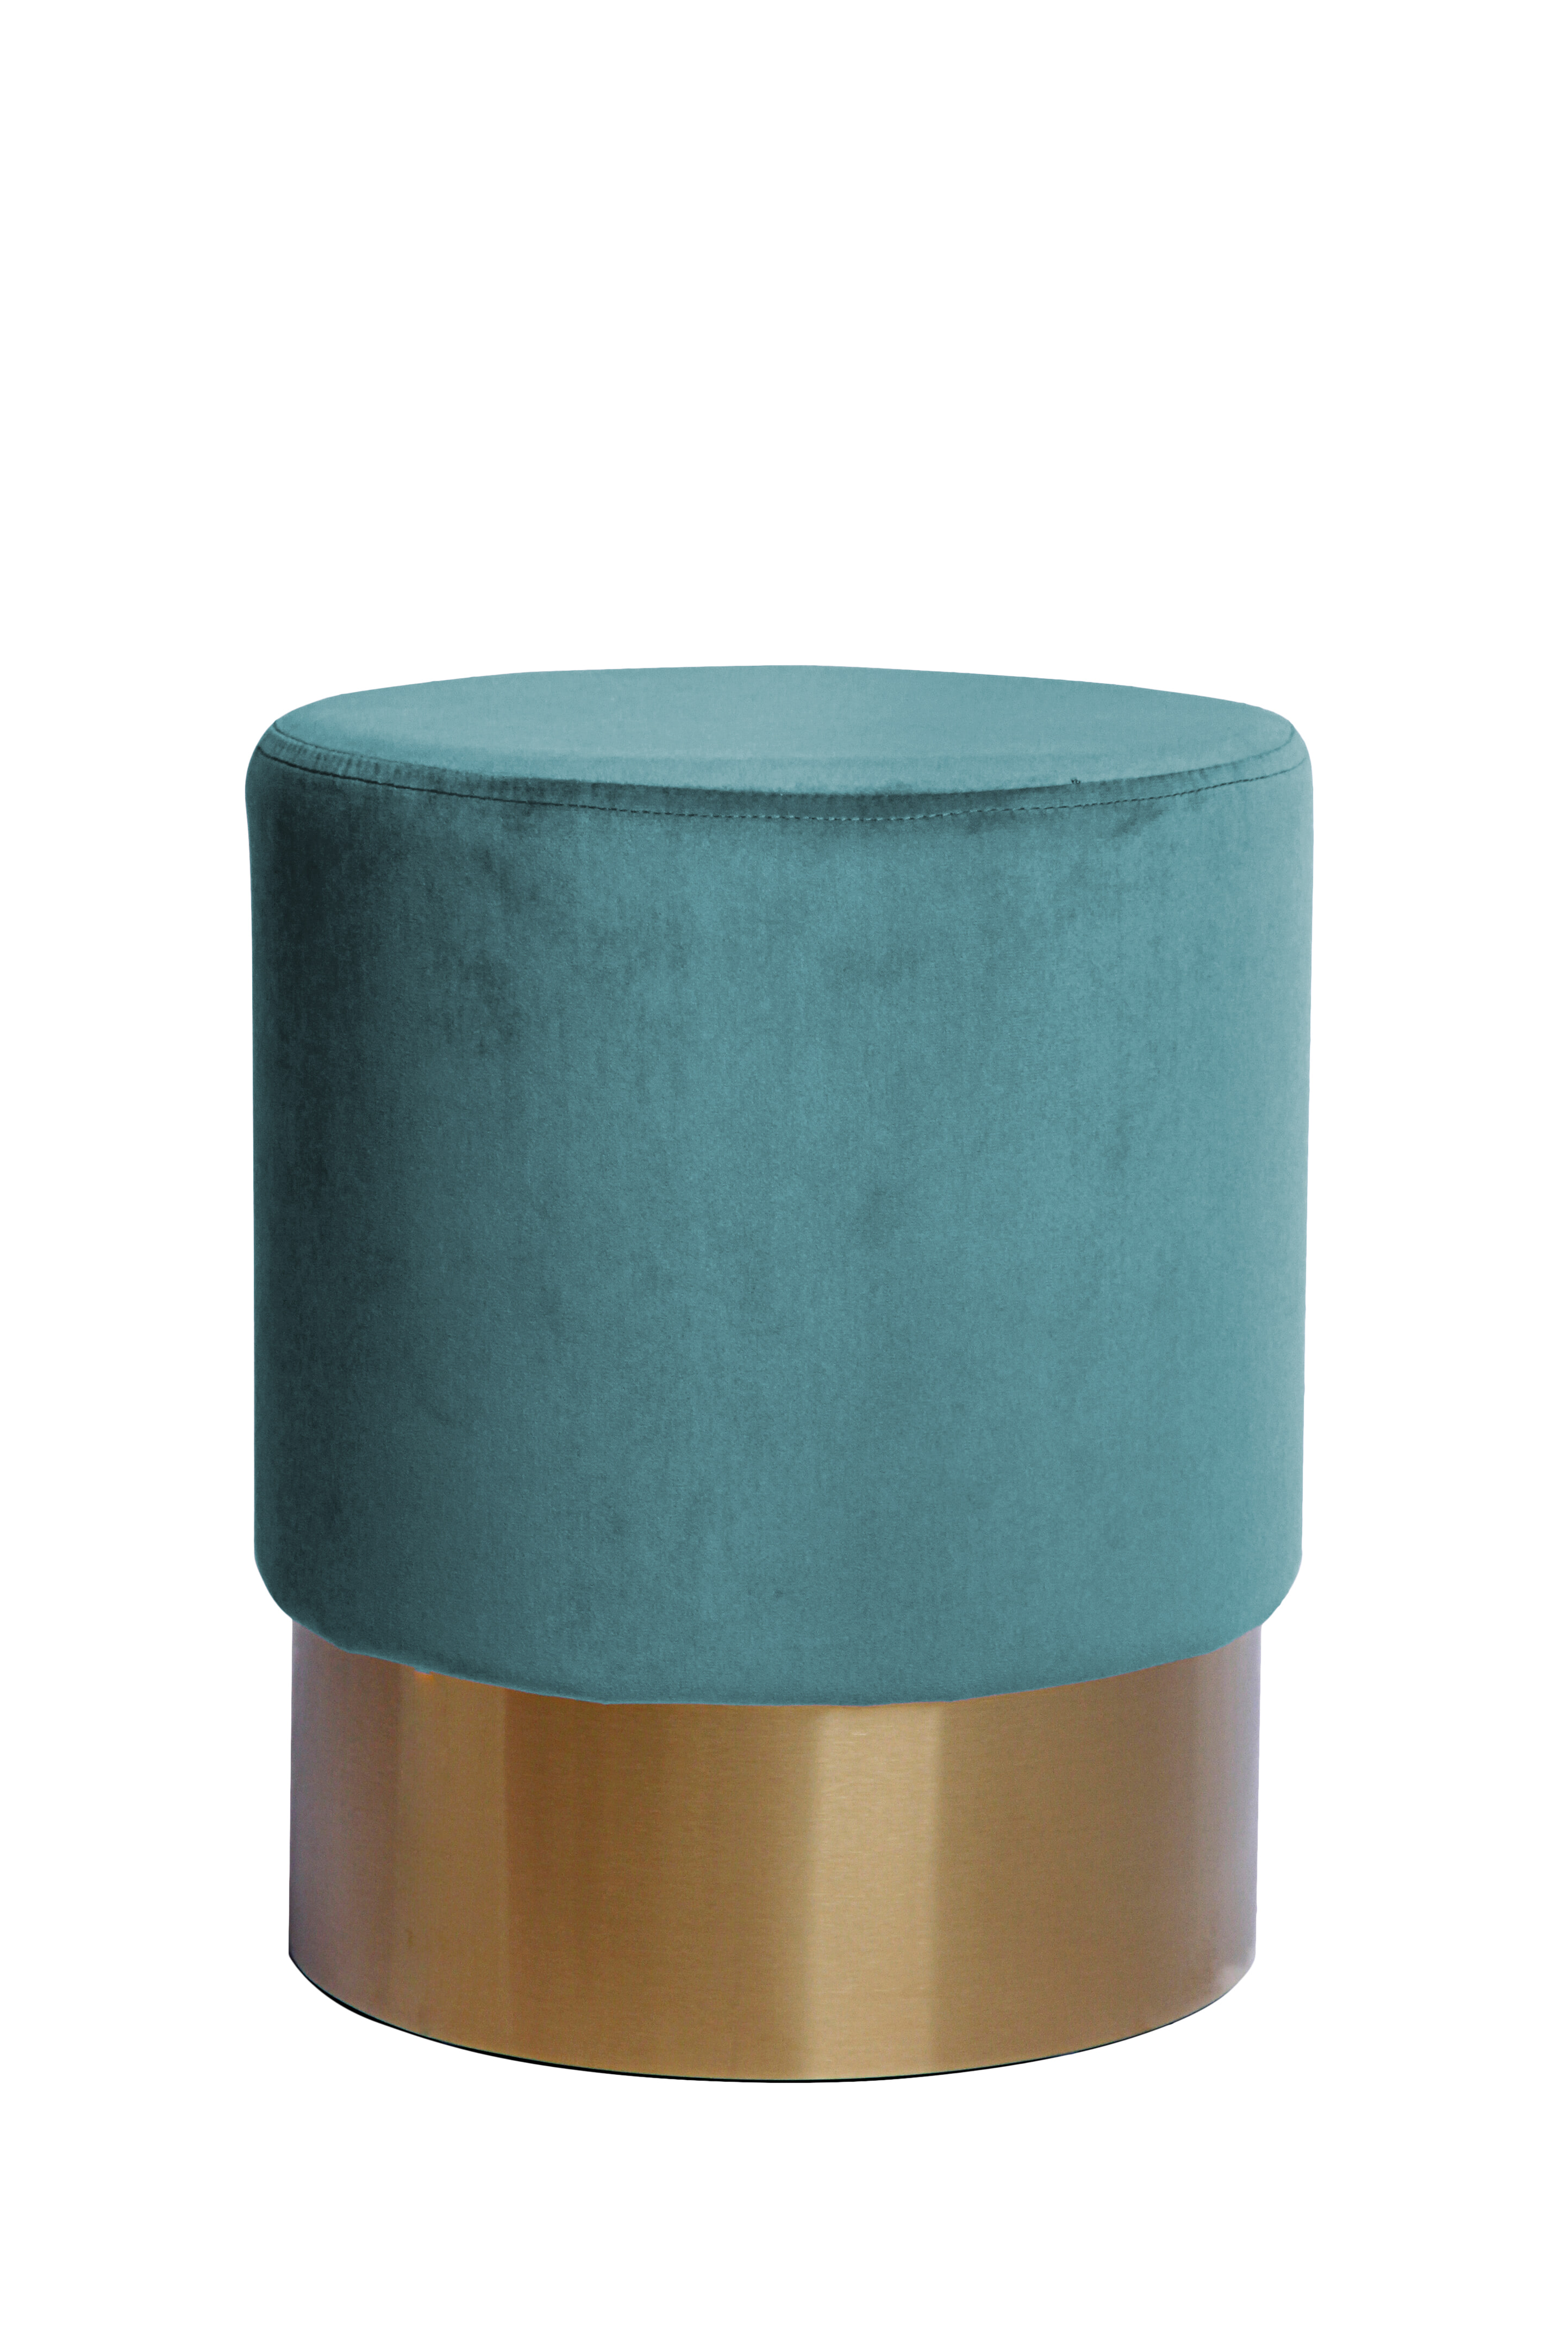 Kayoom Poef 'Nano' 35cm, kleur turquoise